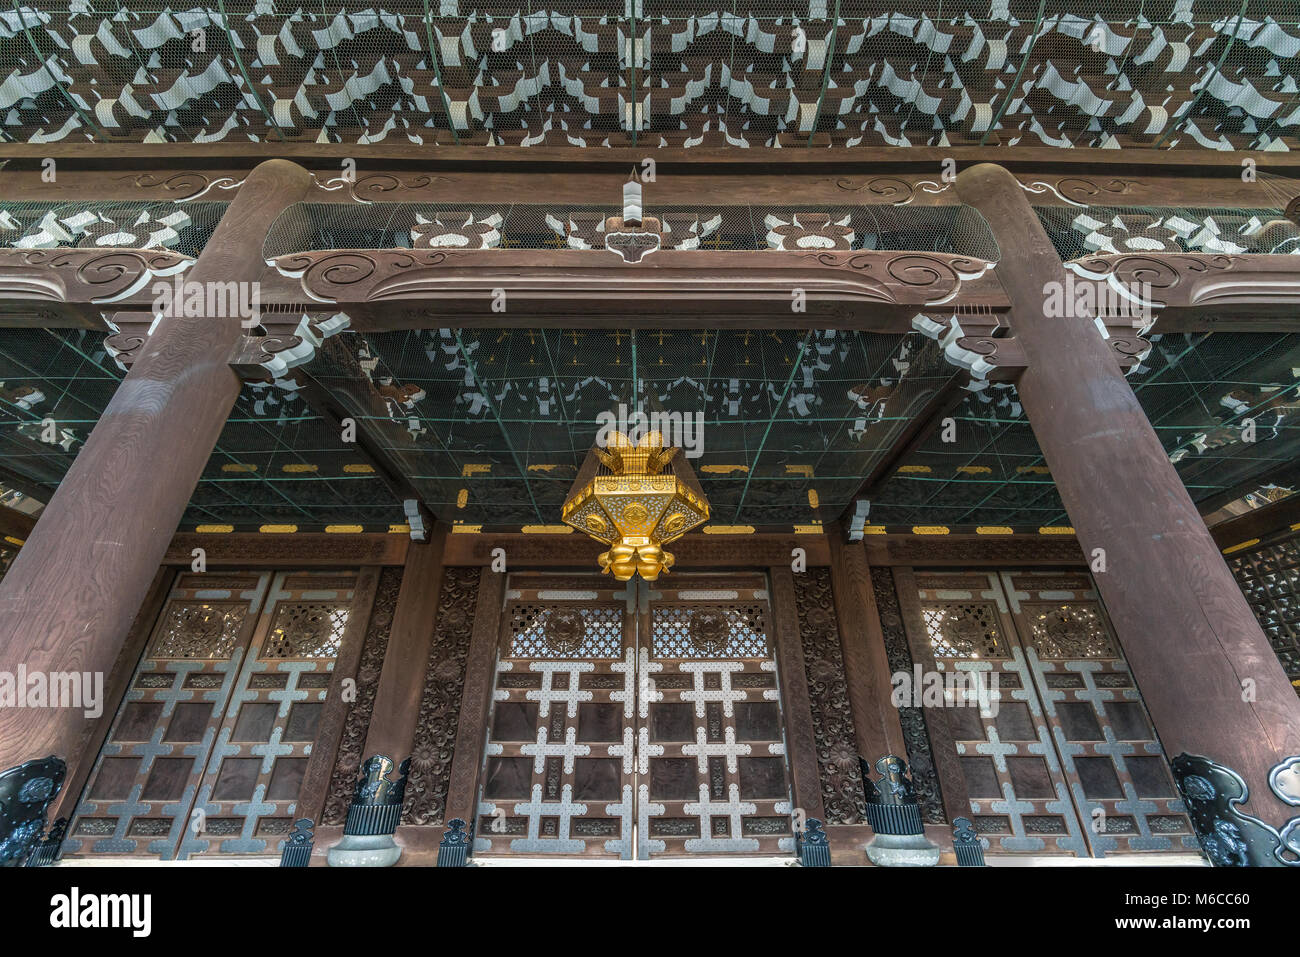 Weitwinkelaufnahme der schönen Hishidoro hanging lantern an der Gründer Halle Tor (Goei - Mon) Shinshu Otani-ha oder Higashi Hongan-ji. Stockfoto